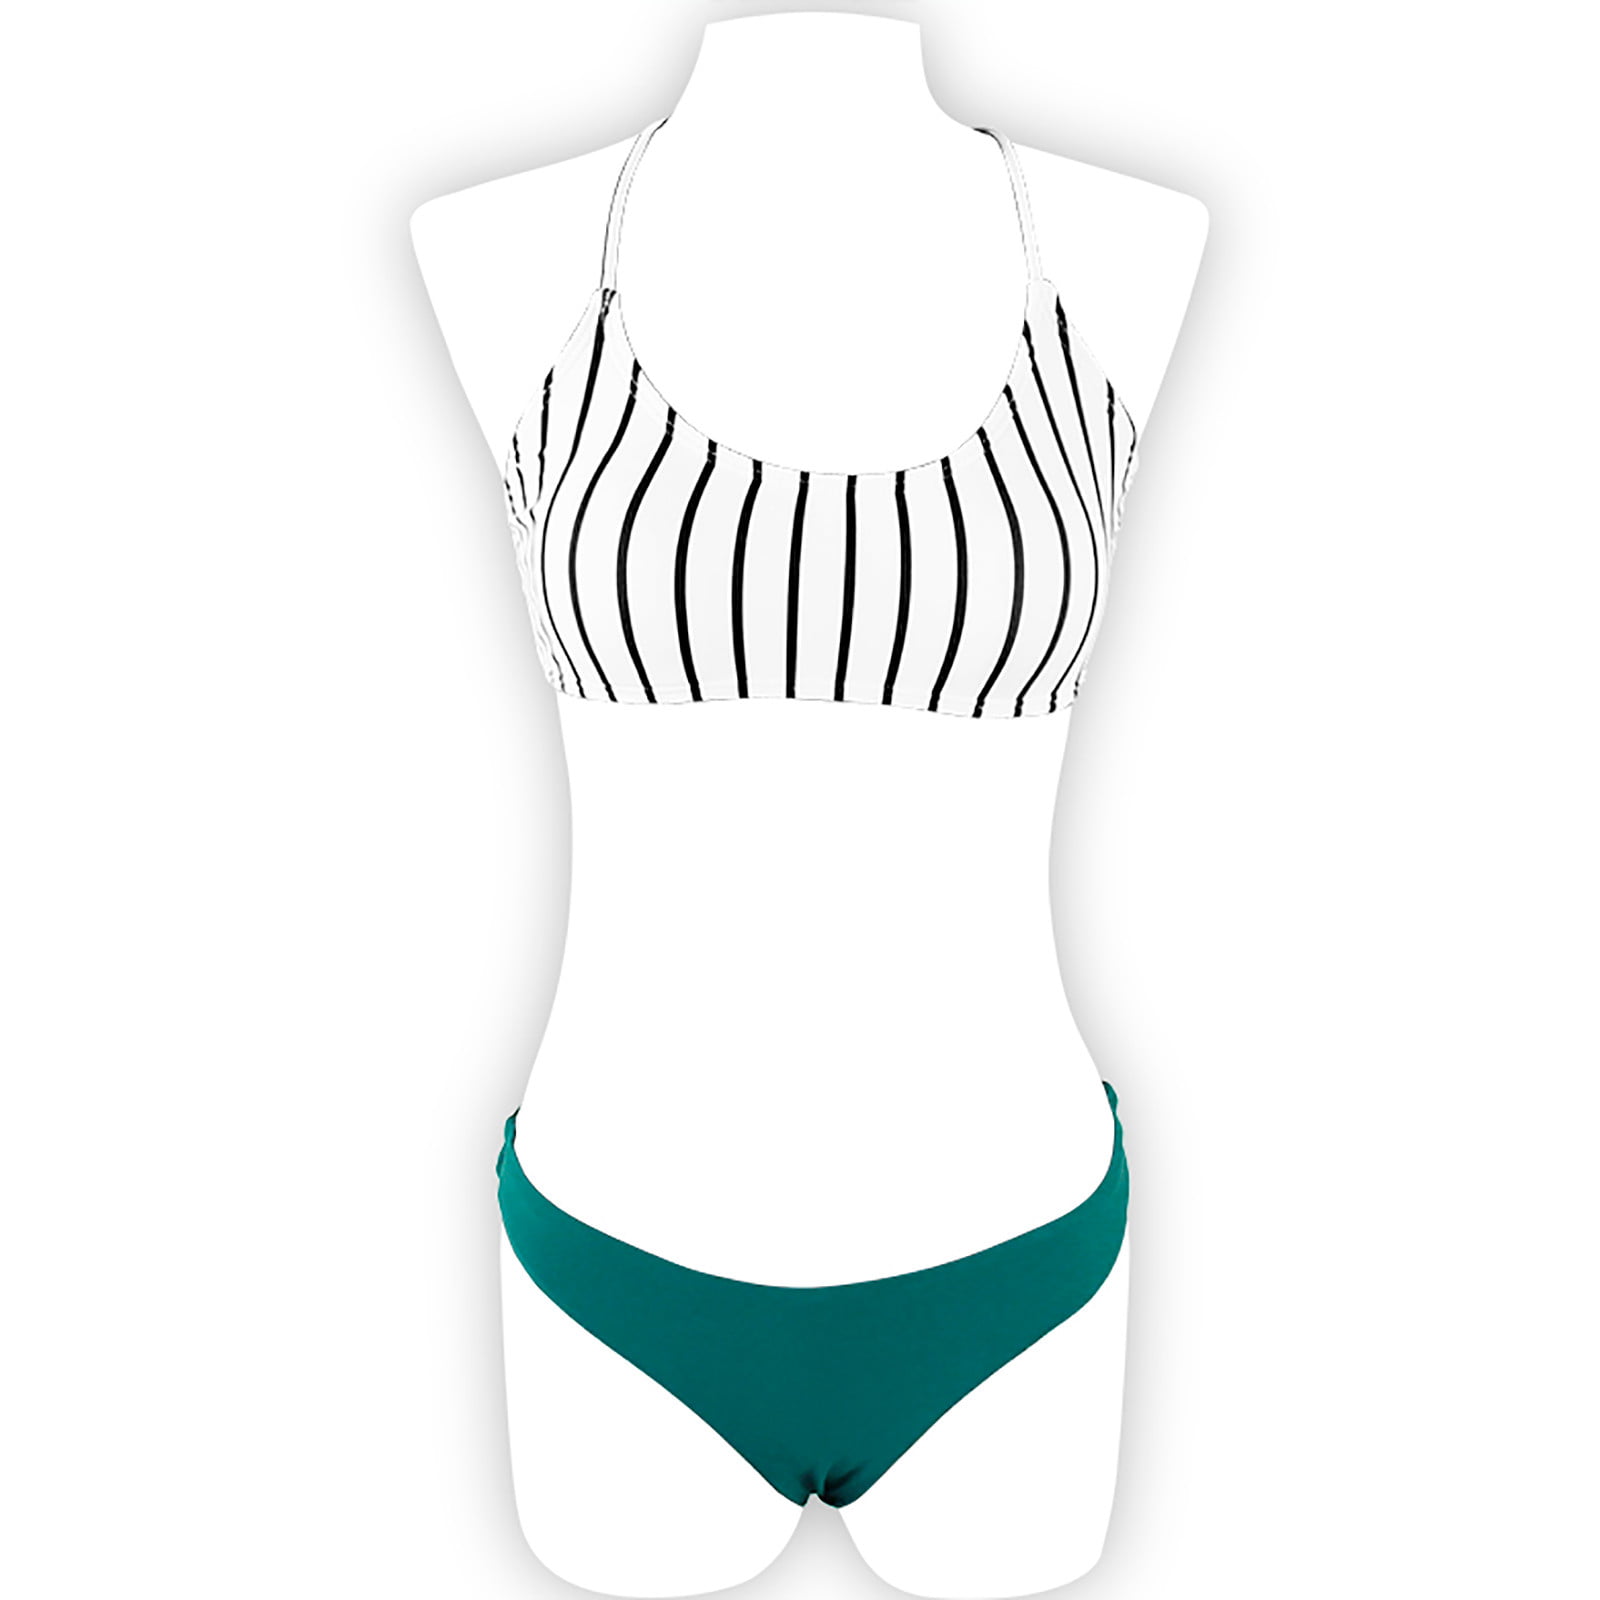 Czhjs Womens Thong Bikini Clearance Swimsuit For Women Striped Cheeky Two Piece Swimwear High